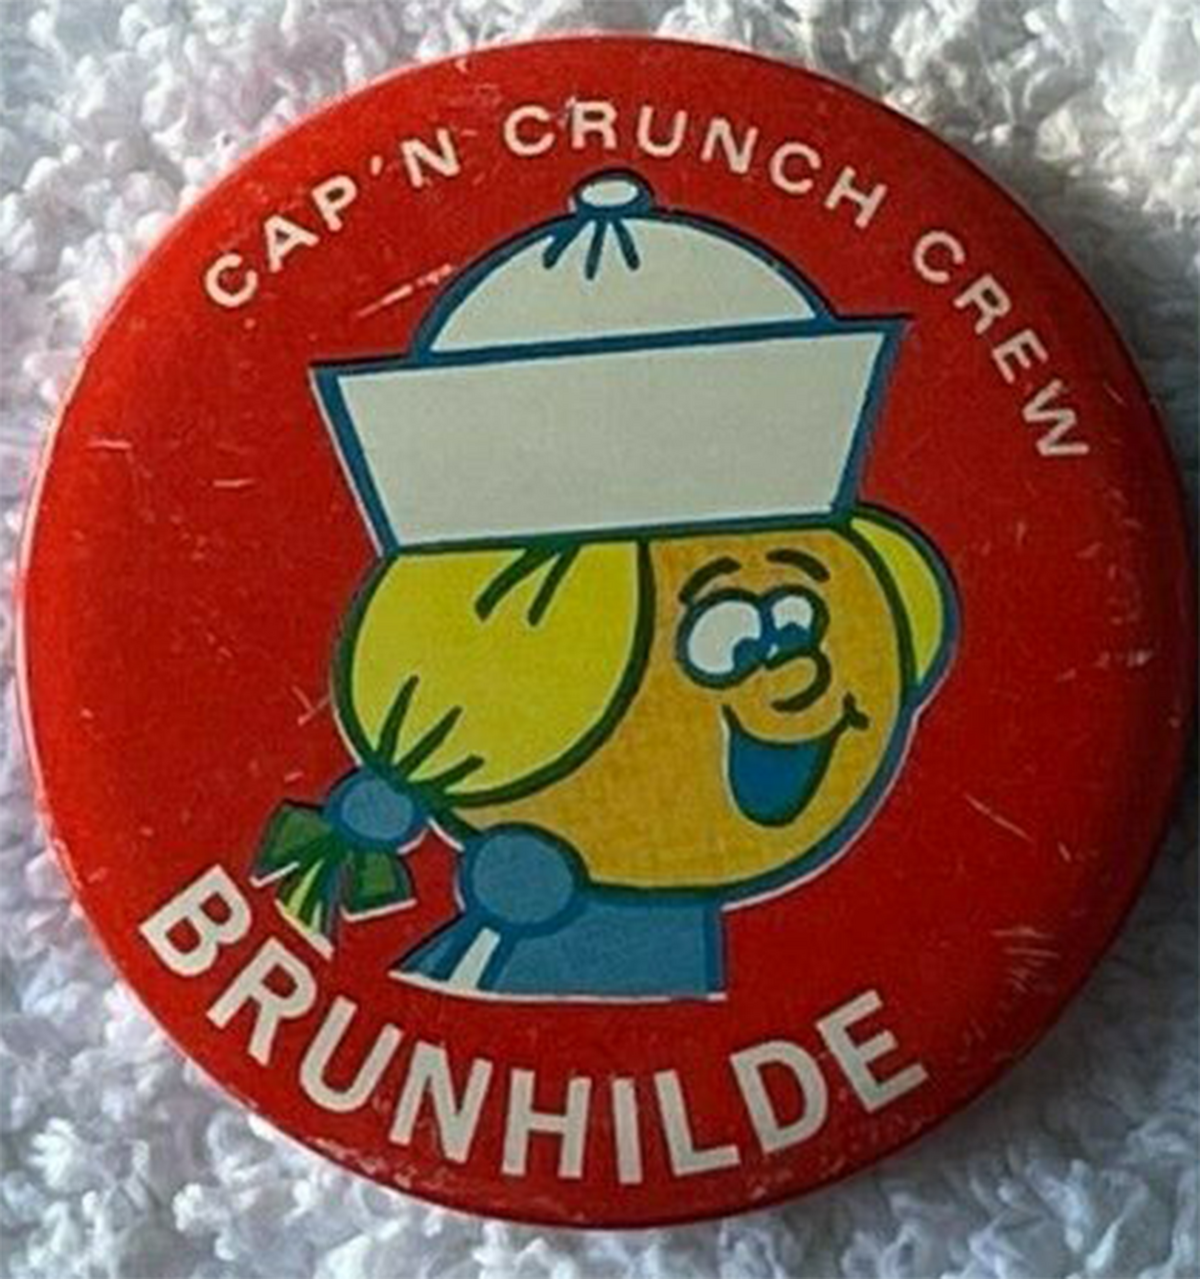 Prize - Cap'n Crunch - Don Mattingly - 1989 Baseball Card, Cereal Wiki